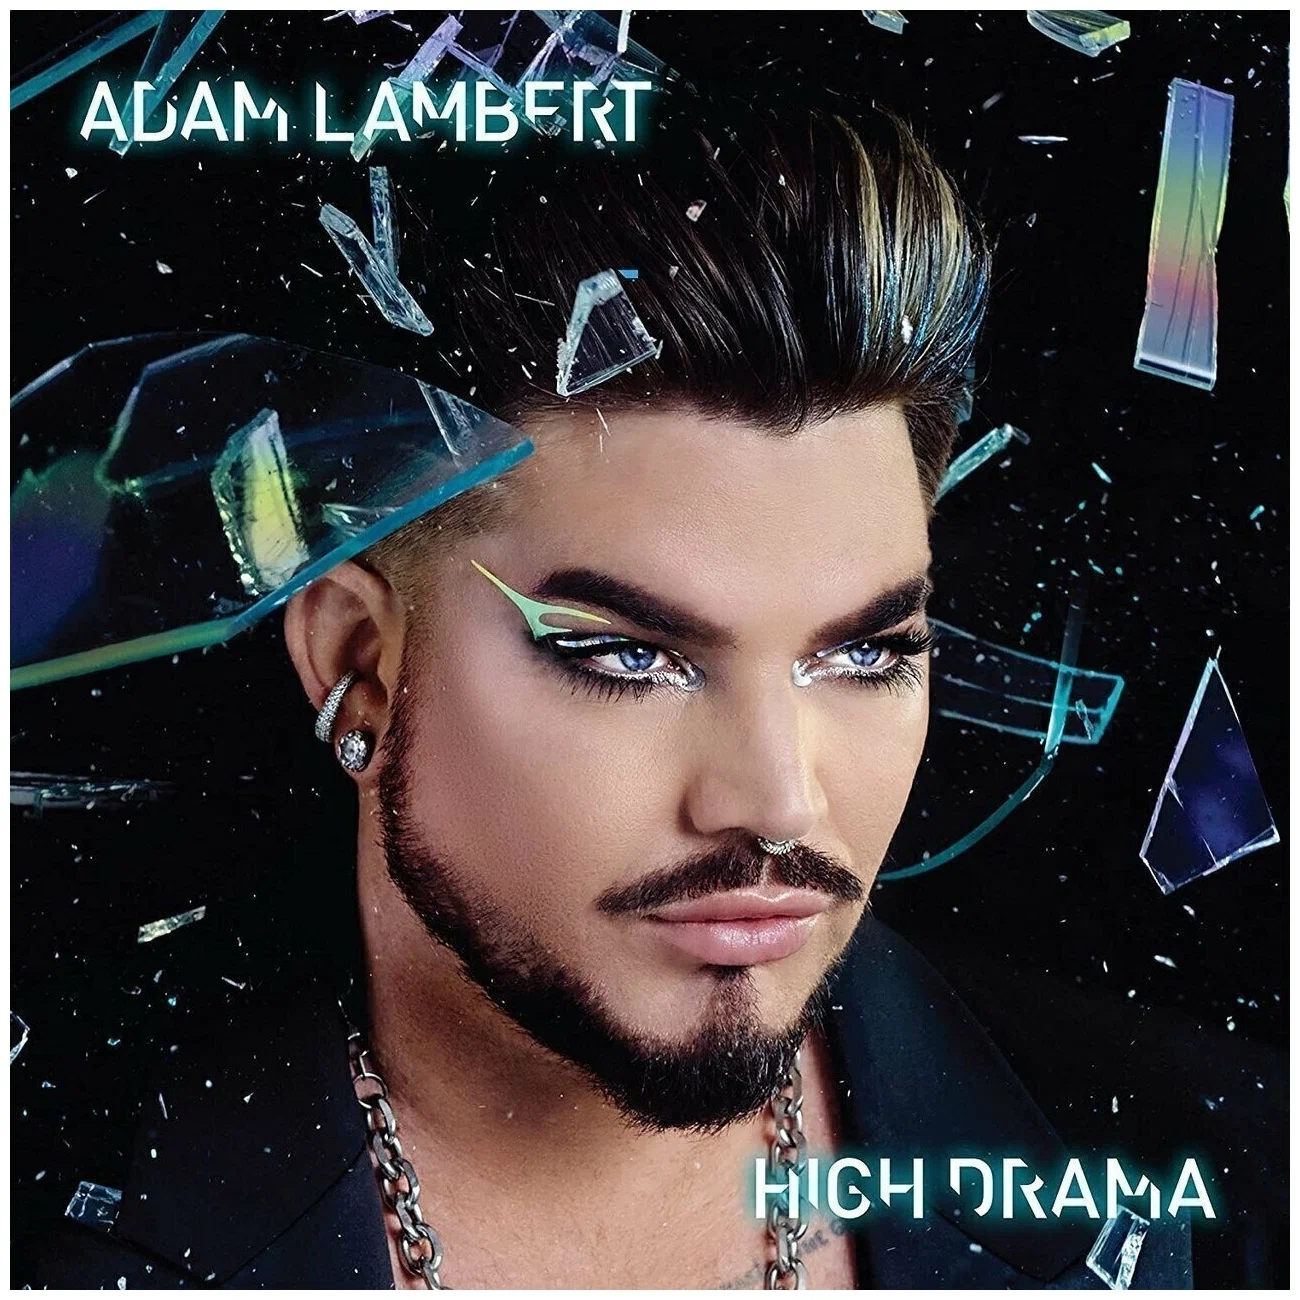 Виниловая Пластинка Lambert, Adam, High Drama (5054197308628) виниловая пластинка adam lambert high drama clear lp